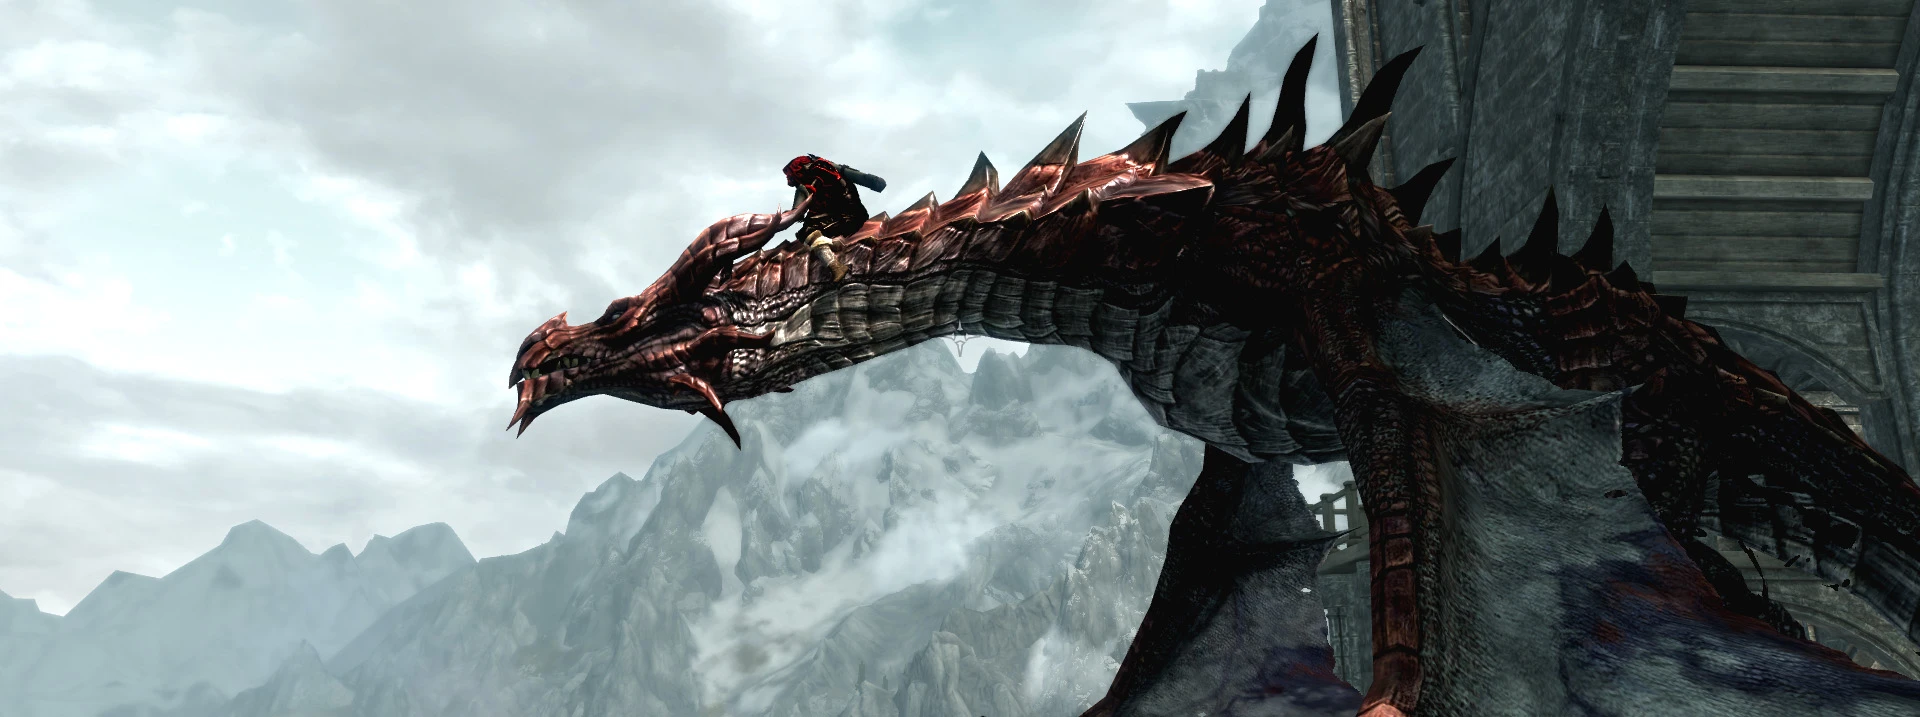 skyrim ride dragon mod